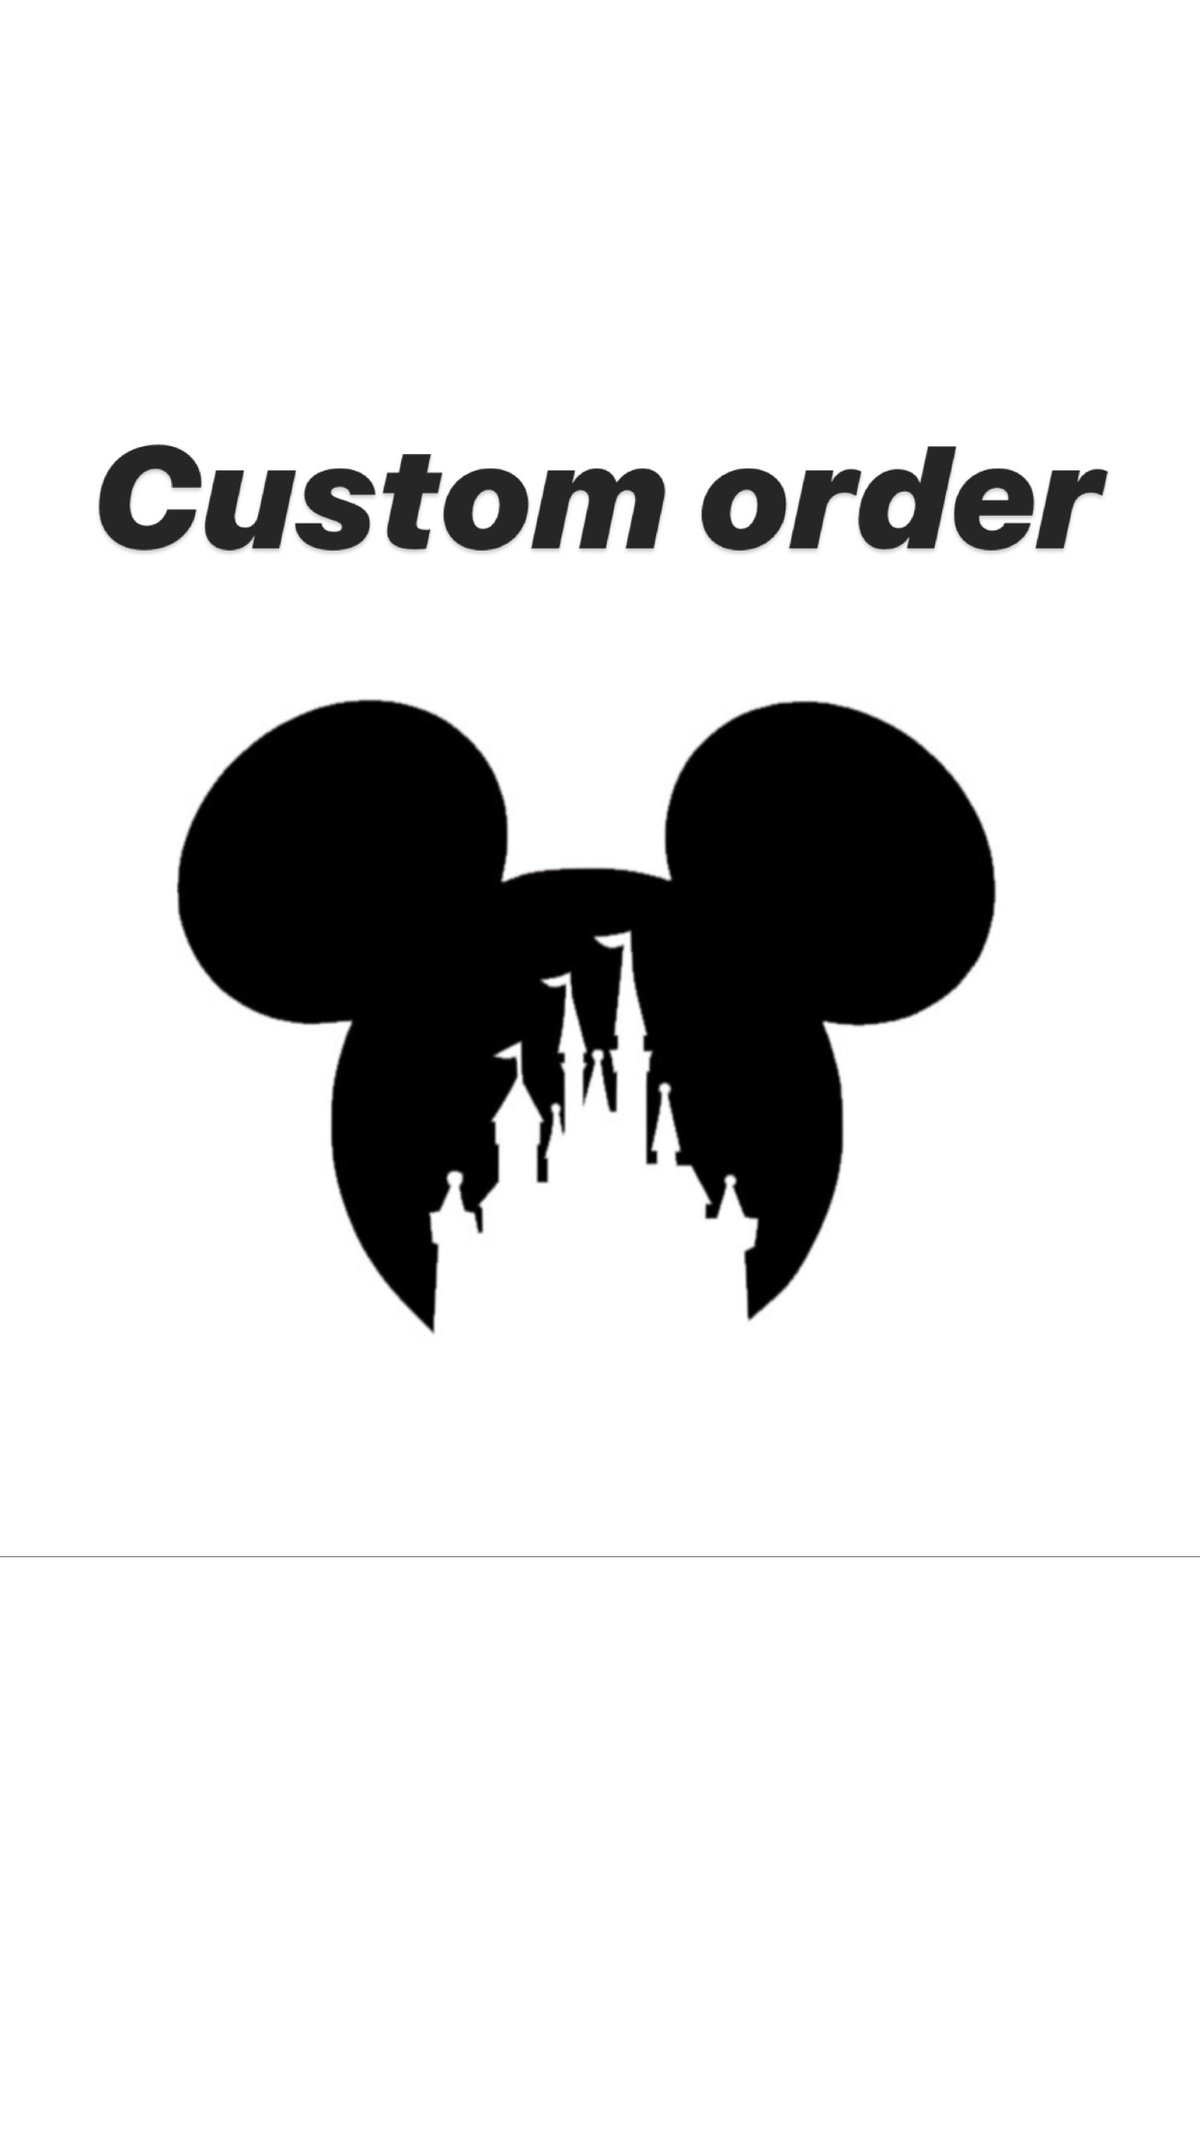 Image of Single custom order request 